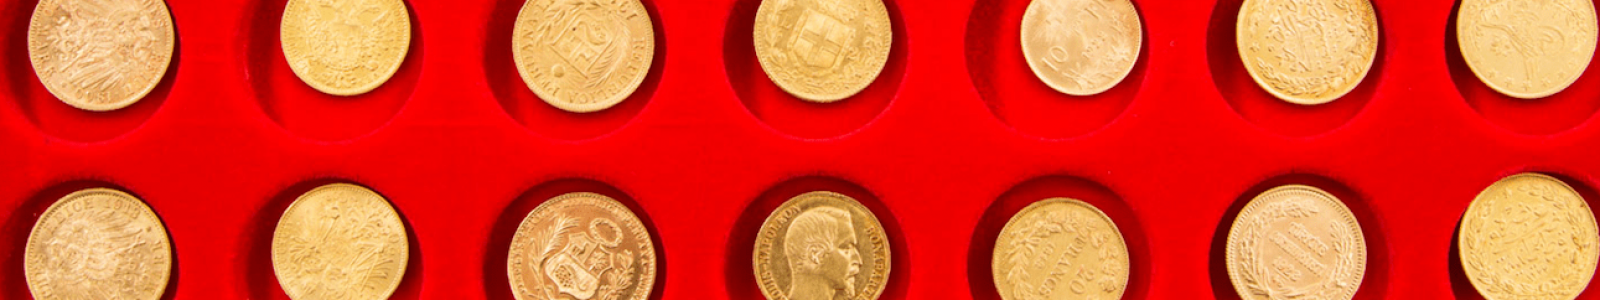 Монеты, Медали, Historika, Банкноты